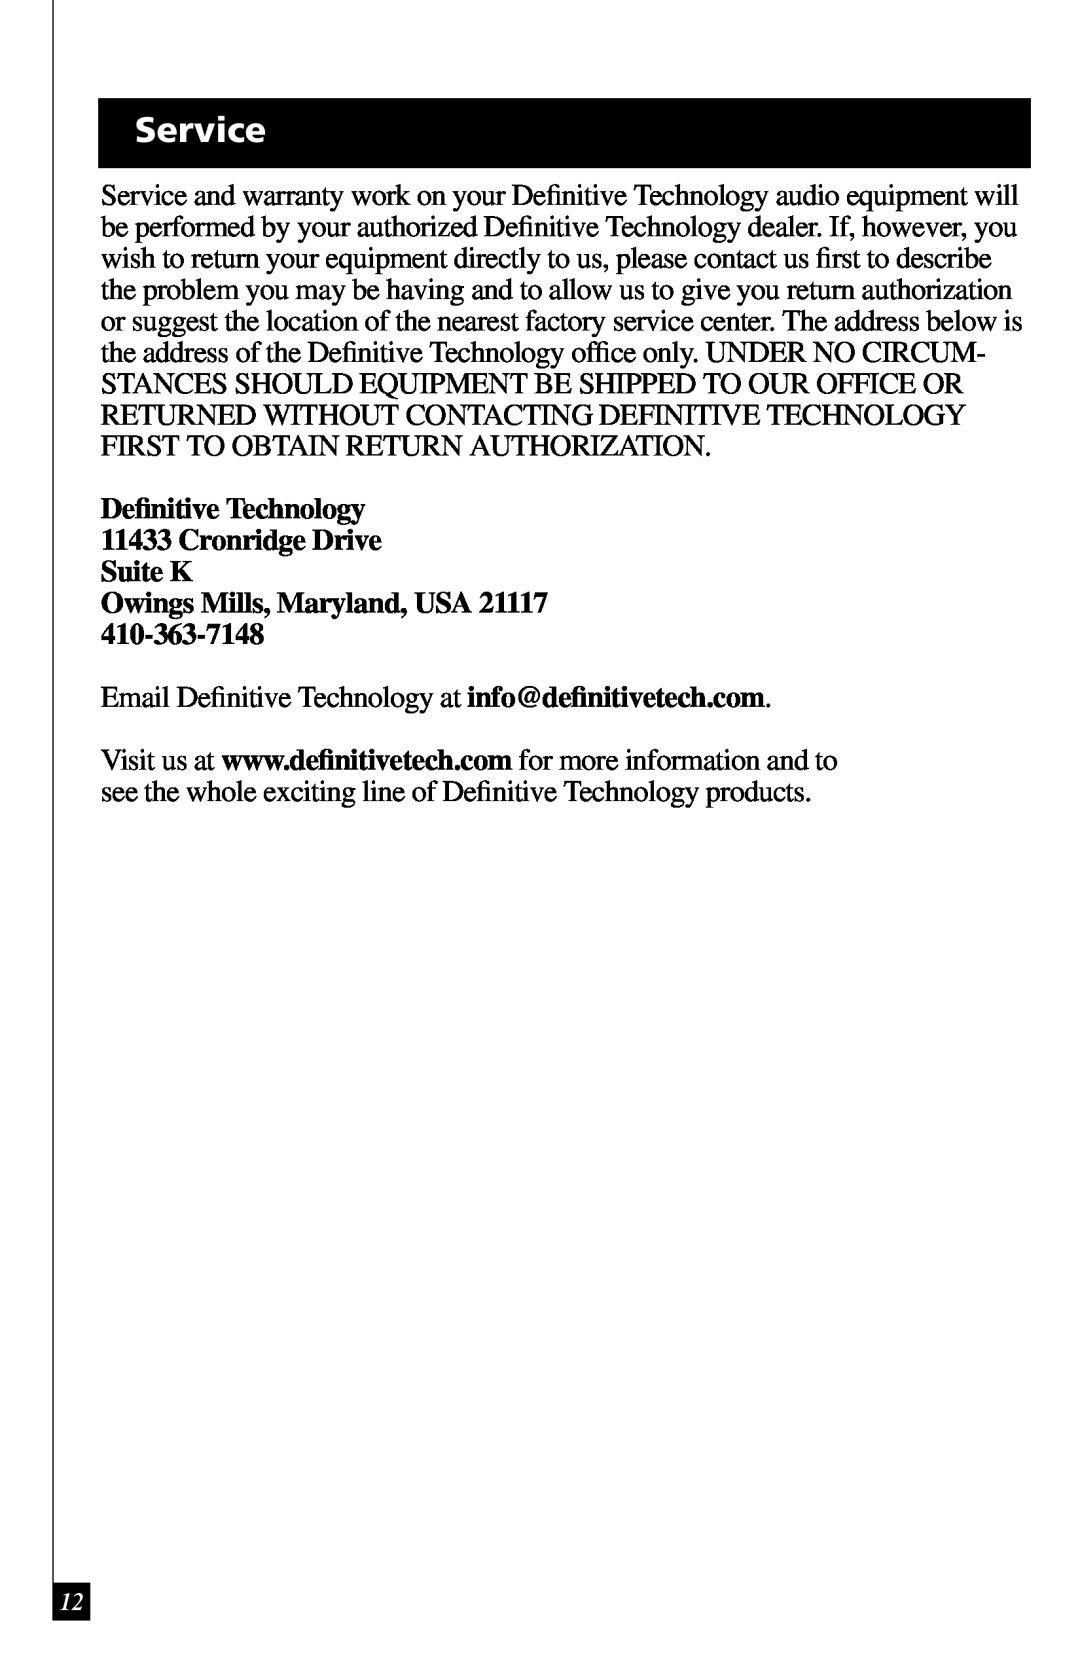 Definitive Technology IWSUB1010 Service, Deﬁnitive Technology, Cronridge Drive Suite K, Owings Mills, Maryland, USA 